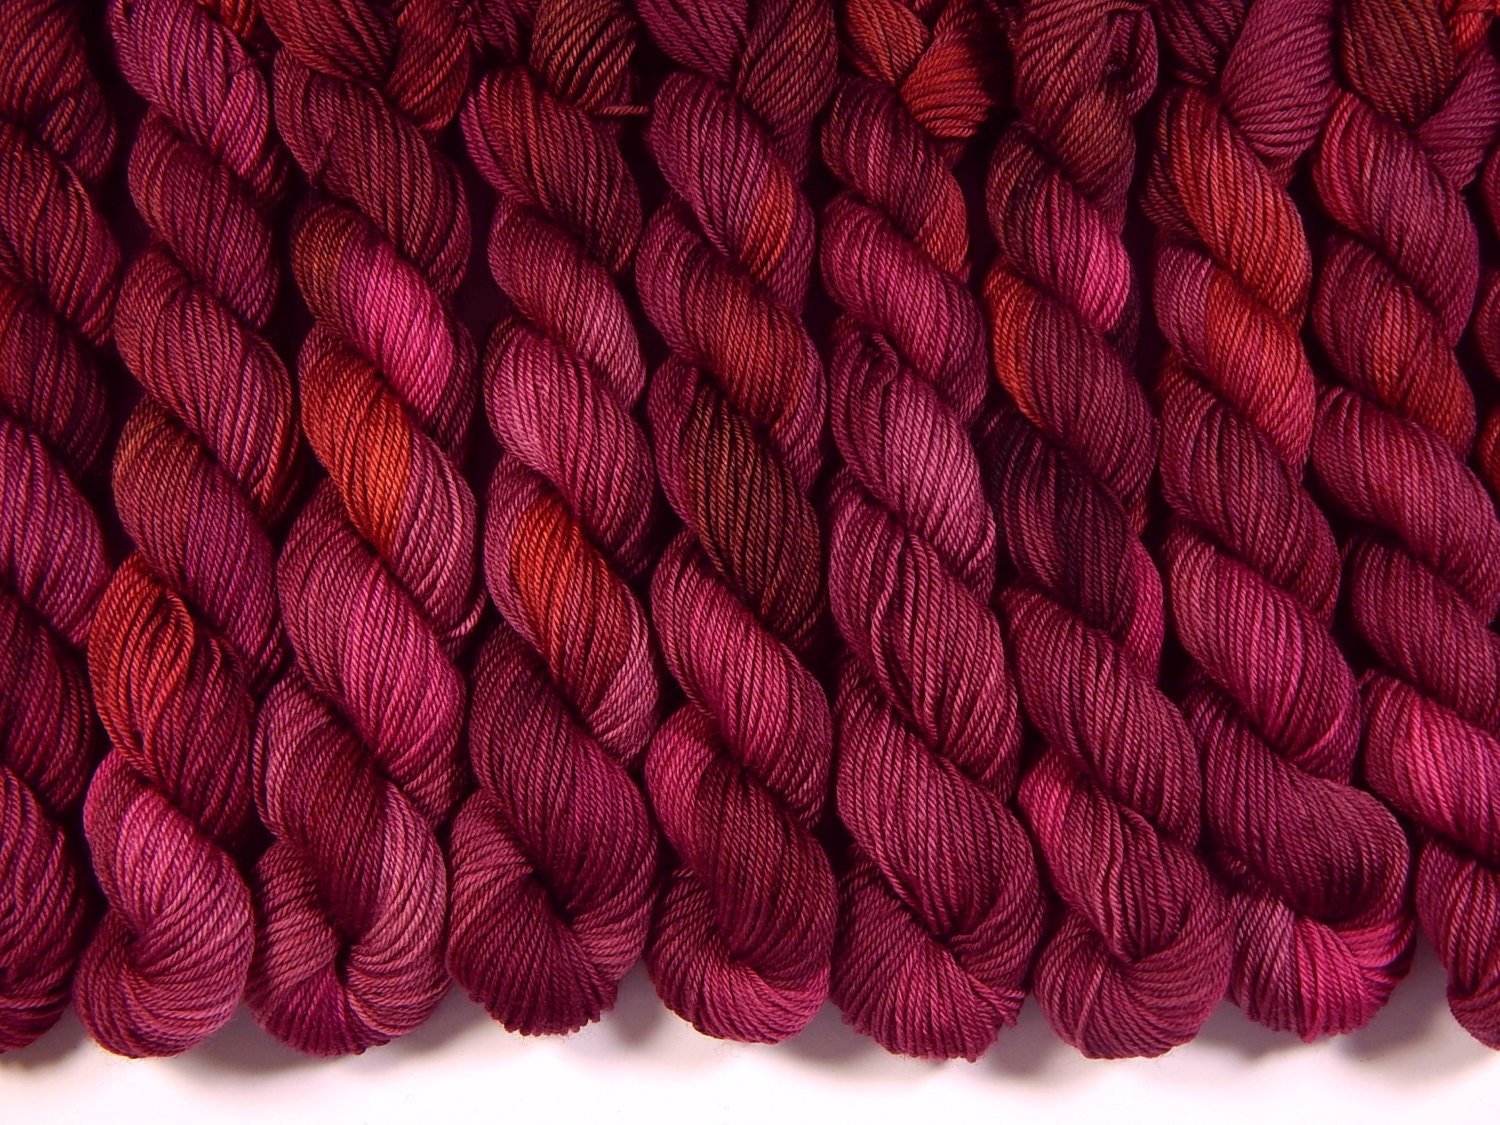 Mini Skeins Hand Dyed Yarn, Sock Weight 4 Ply Superwash Merino Wool - Merlot Multi - Burgundy Red Fingering Knitting Crochet Yarn, DIY Gift